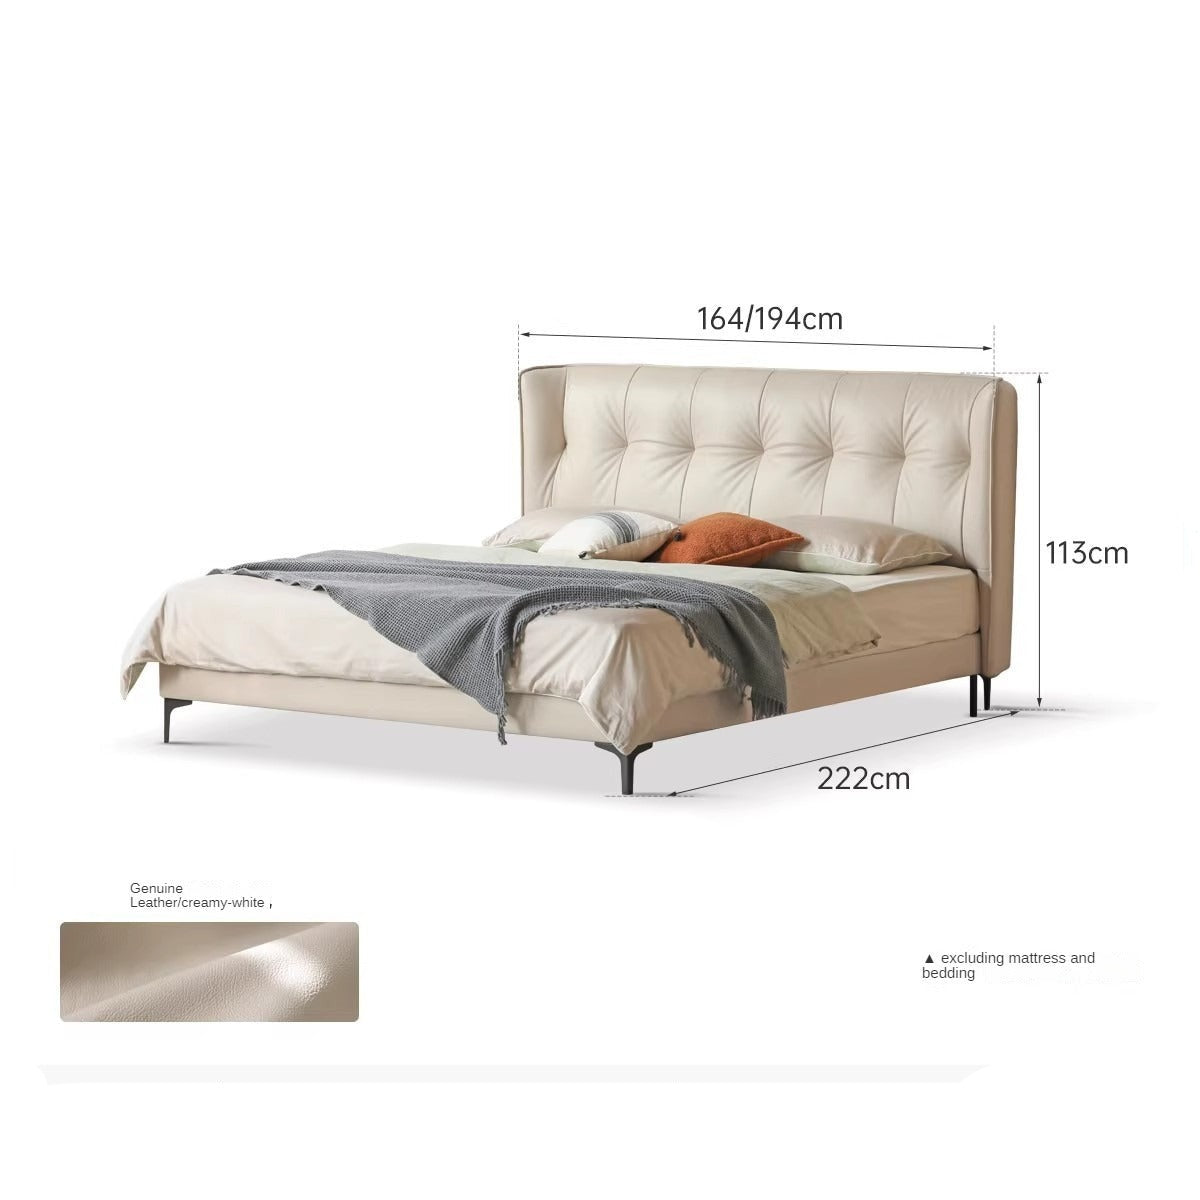 Genuine Leather Light Luxury Edge Bed, Wedding Bed"